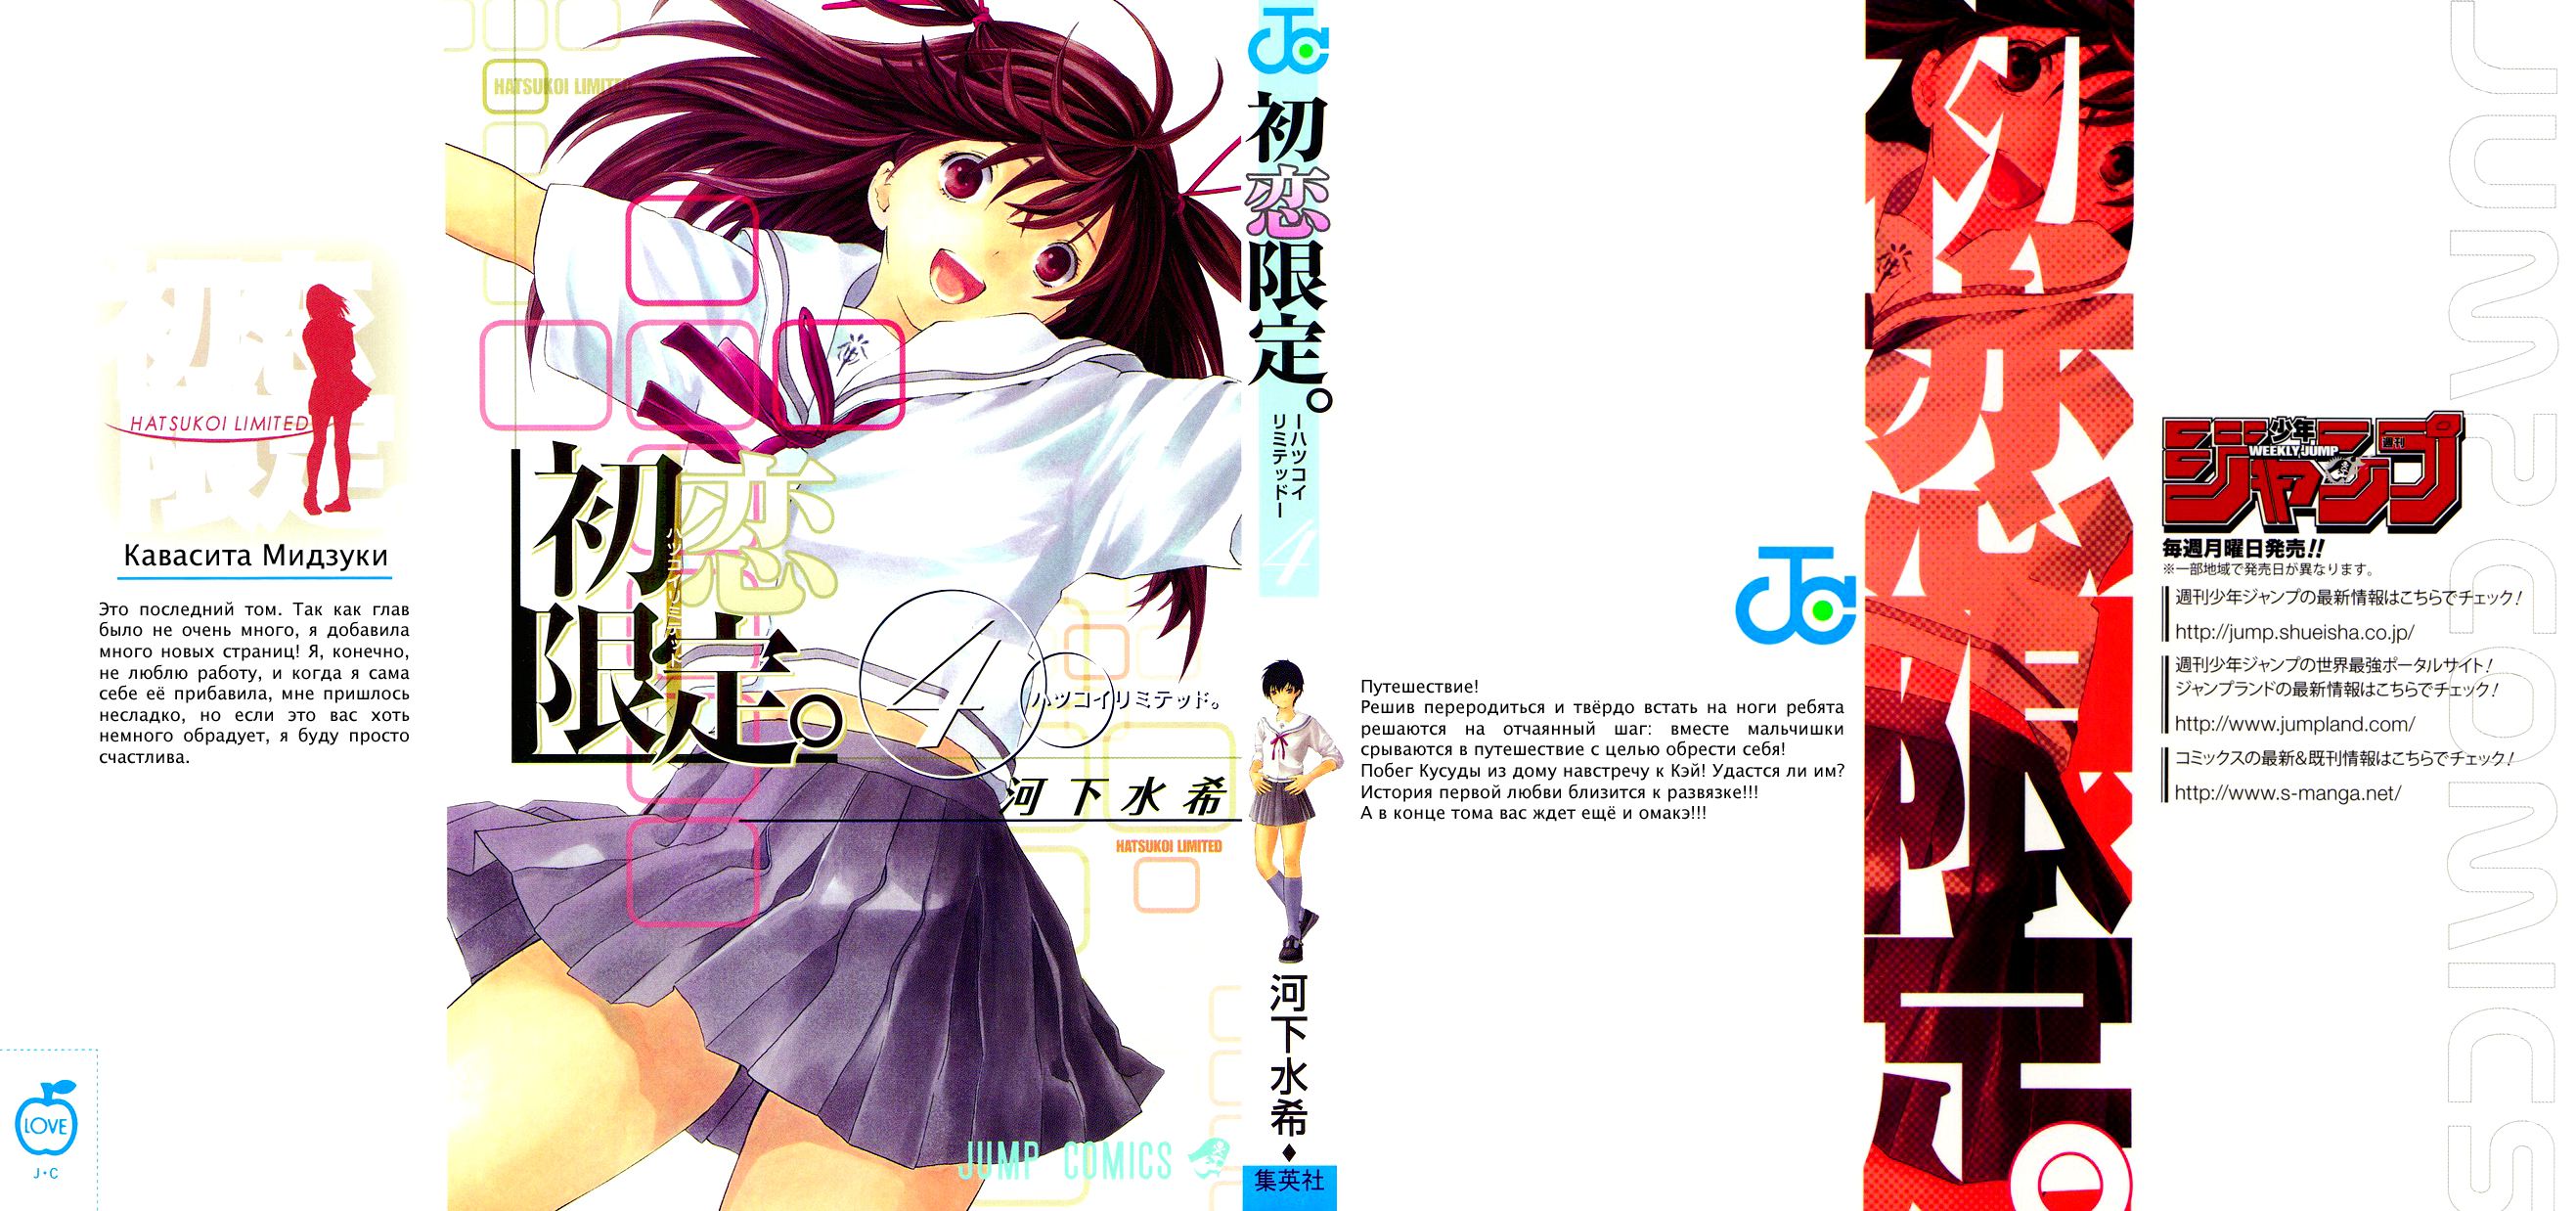 1 том 4 глава. Hatsukoi Catharsis. Hatsukoi Limited (2009) Cover. Hatsukoi ribbon.